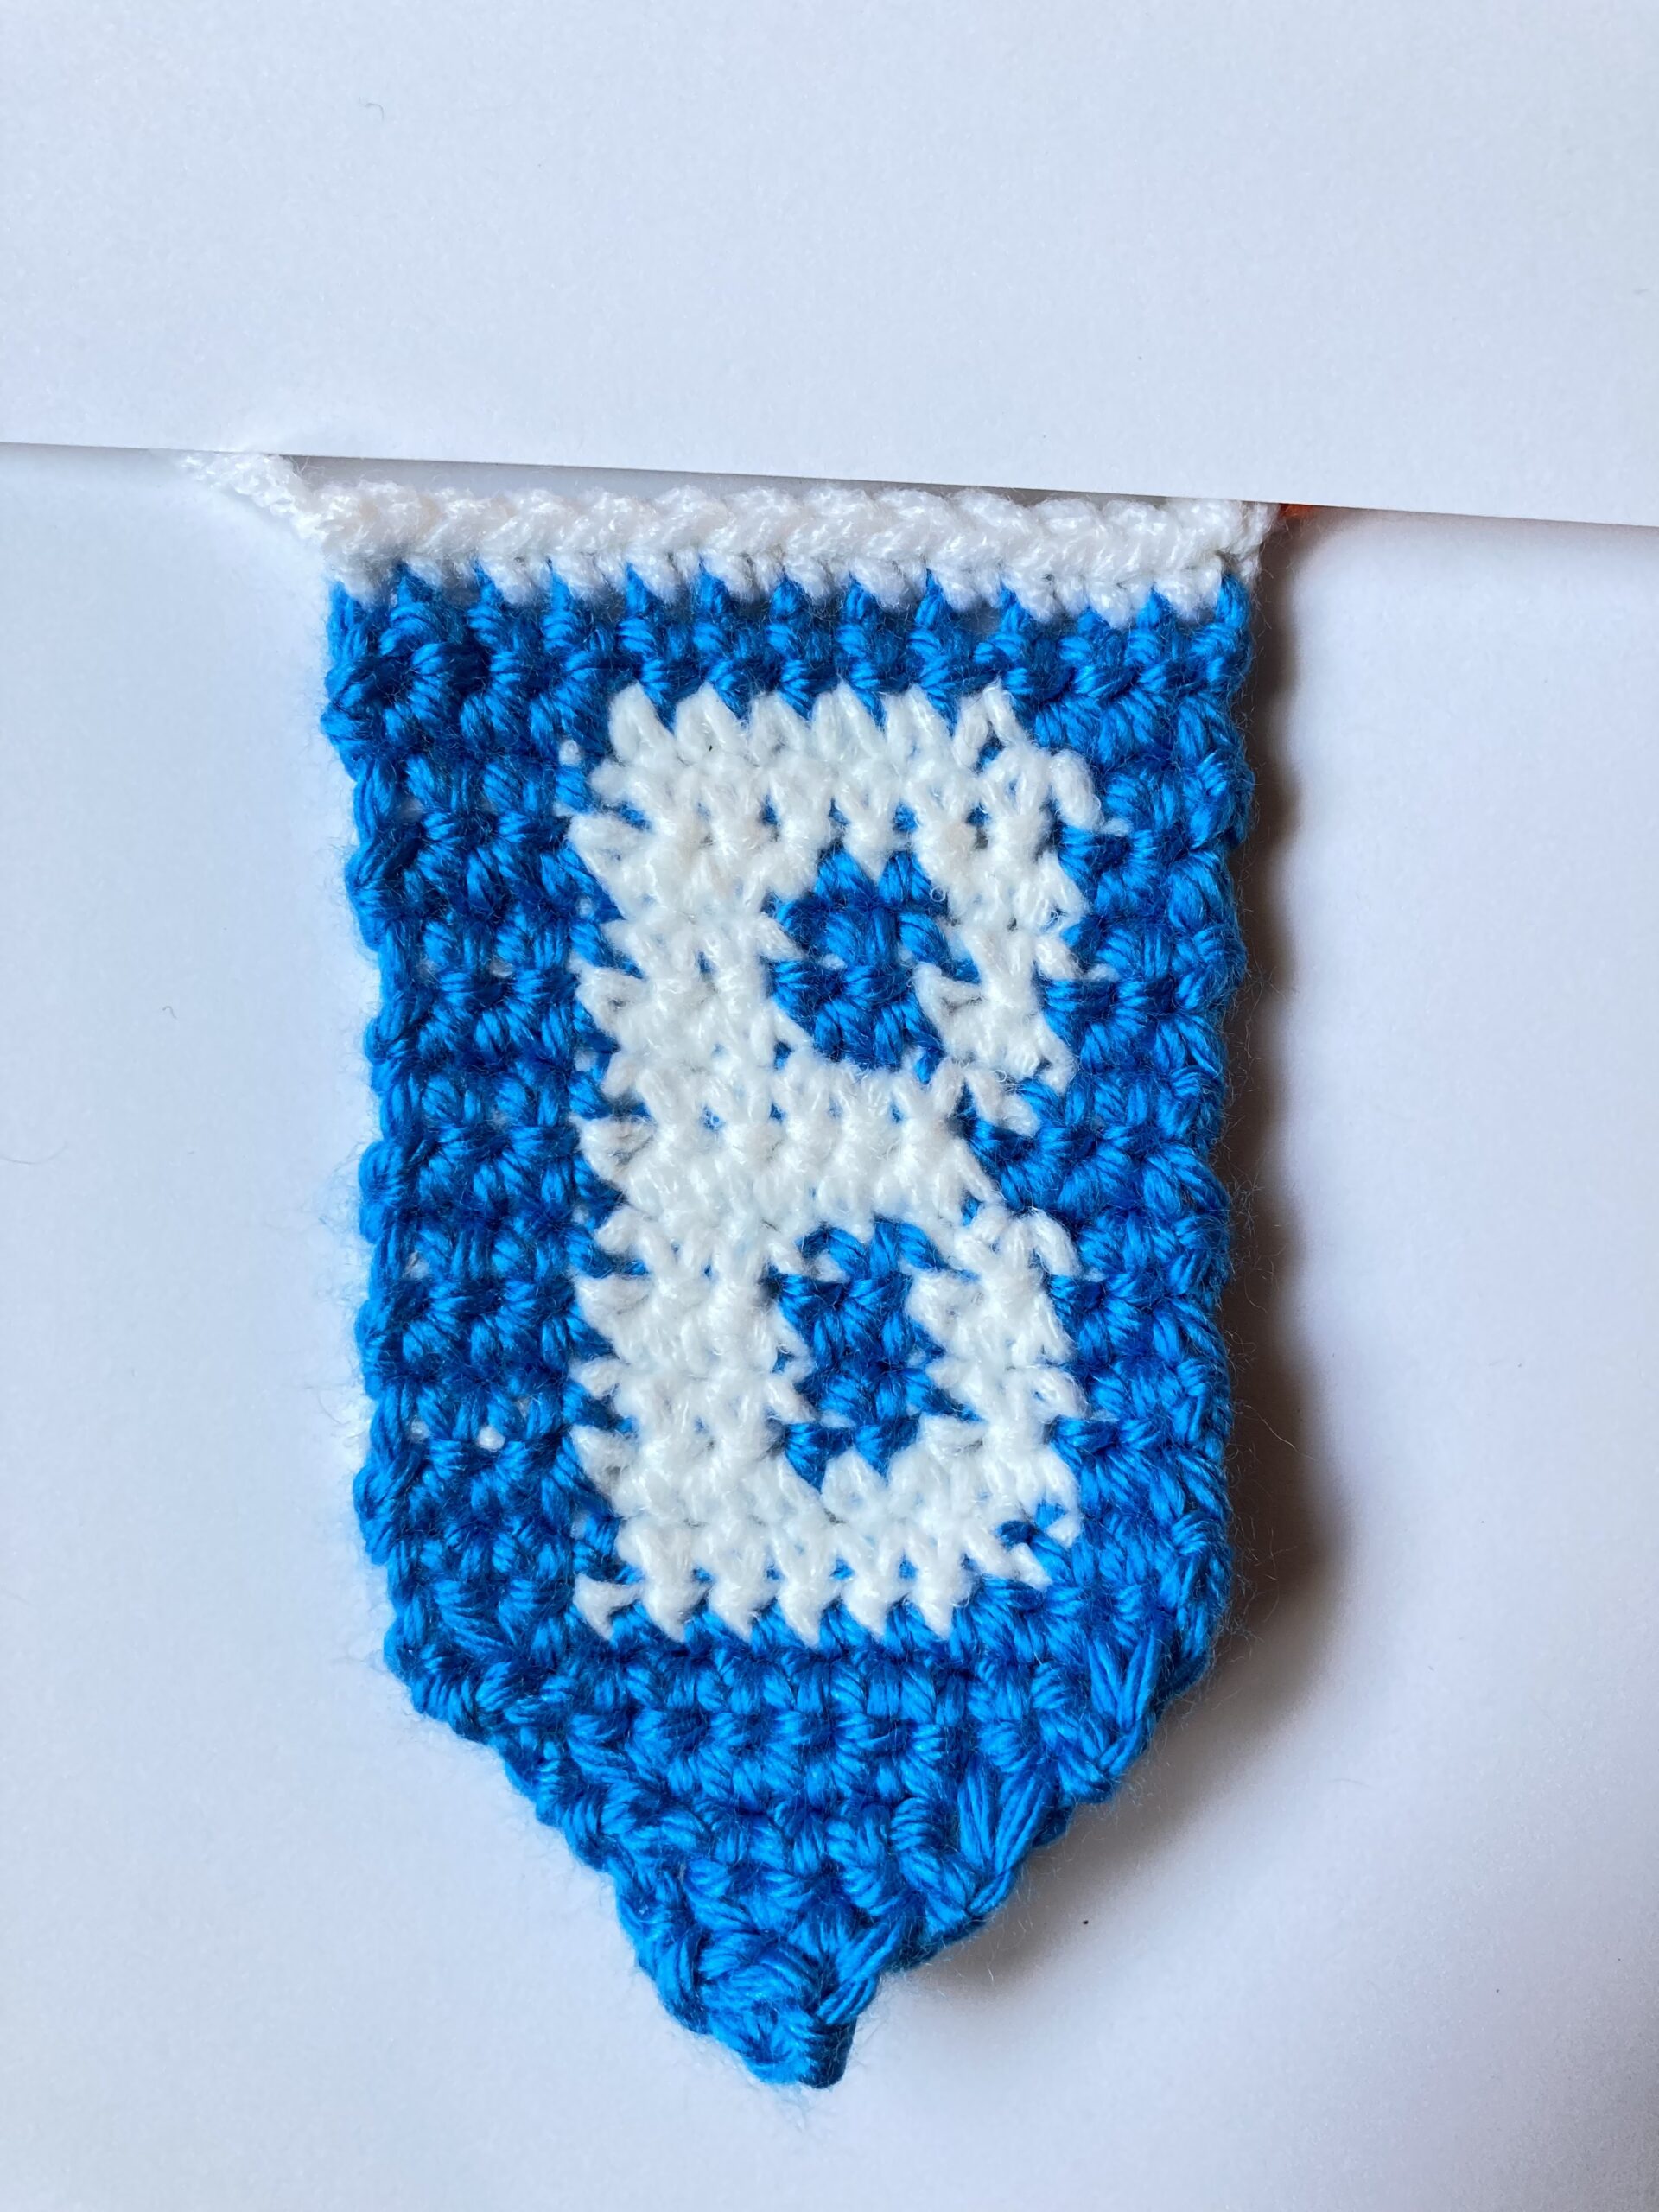 Crochet Capital B Pennant – FREE Pattern